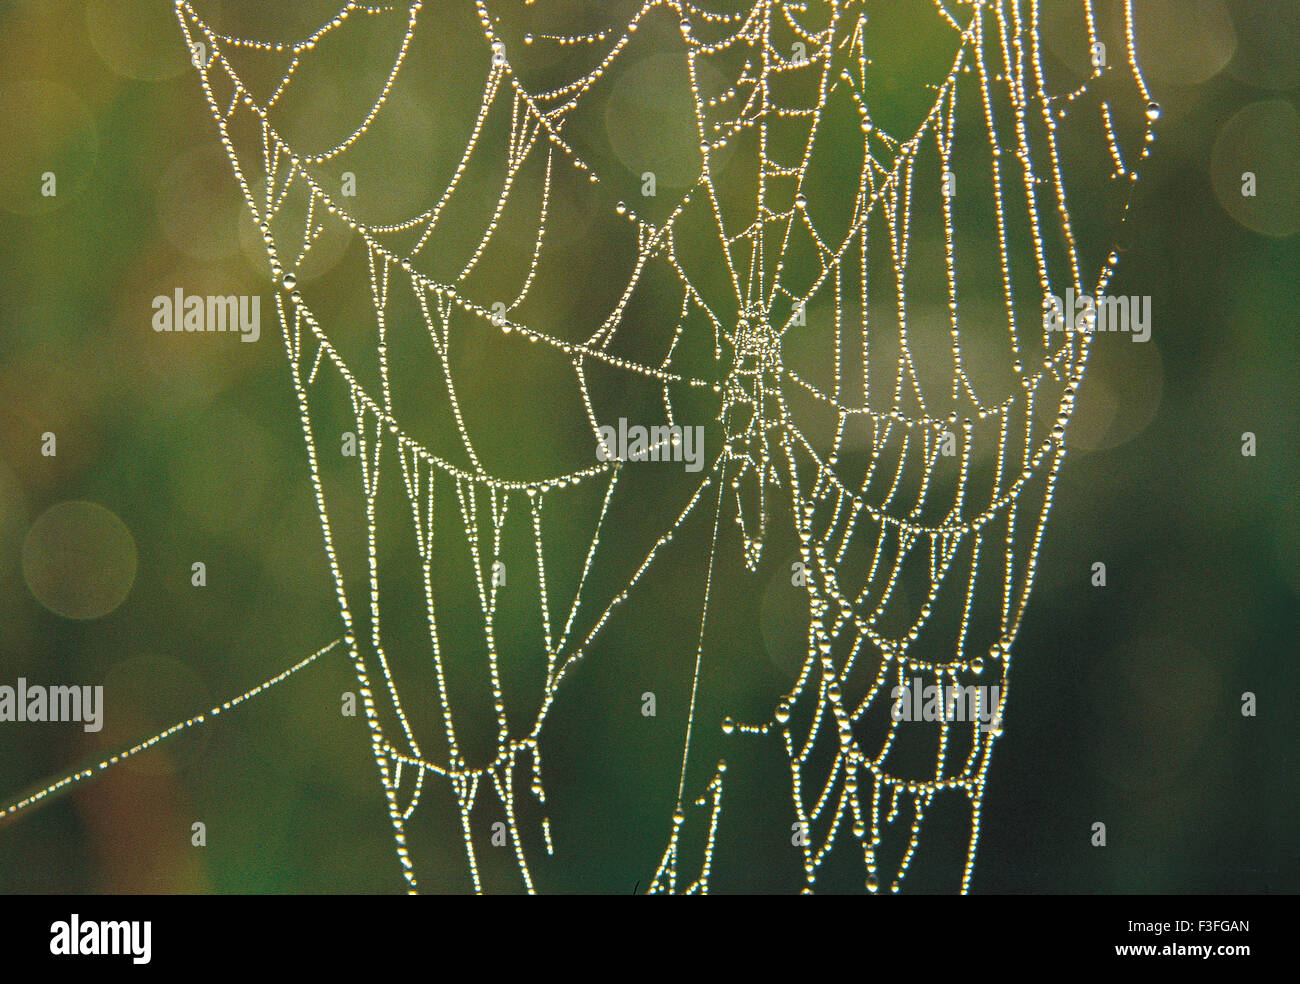 spider web ; spiderweb ; spider's web ; cobweb ; India ; Asia ; Asian ; Indian Stock Photo